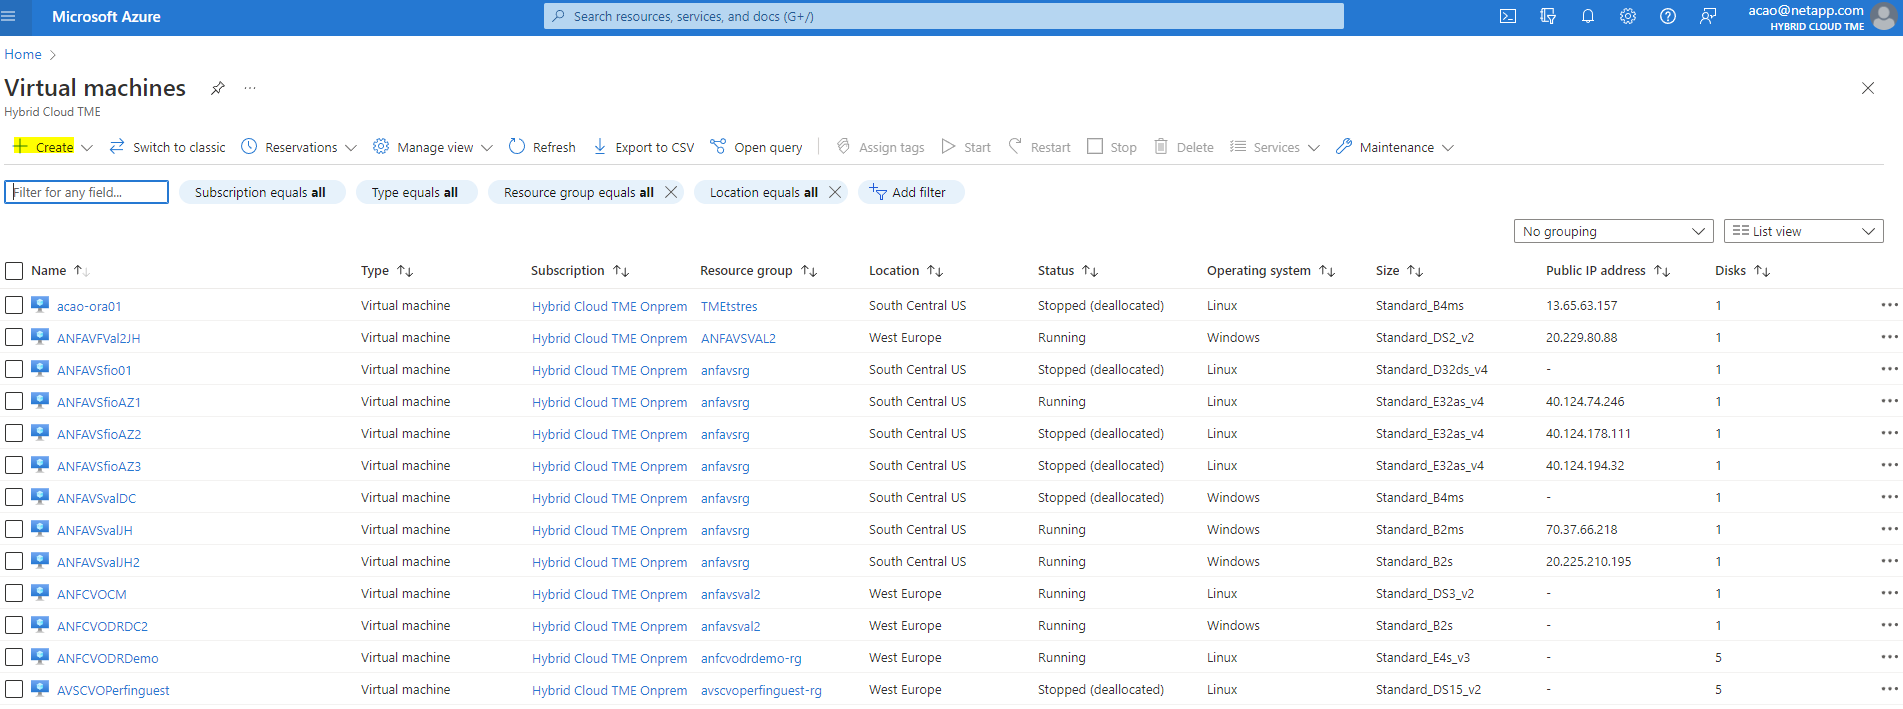 Esta captura de pantalla muestra la lista de máquinas virtuales de Azure disponibles.